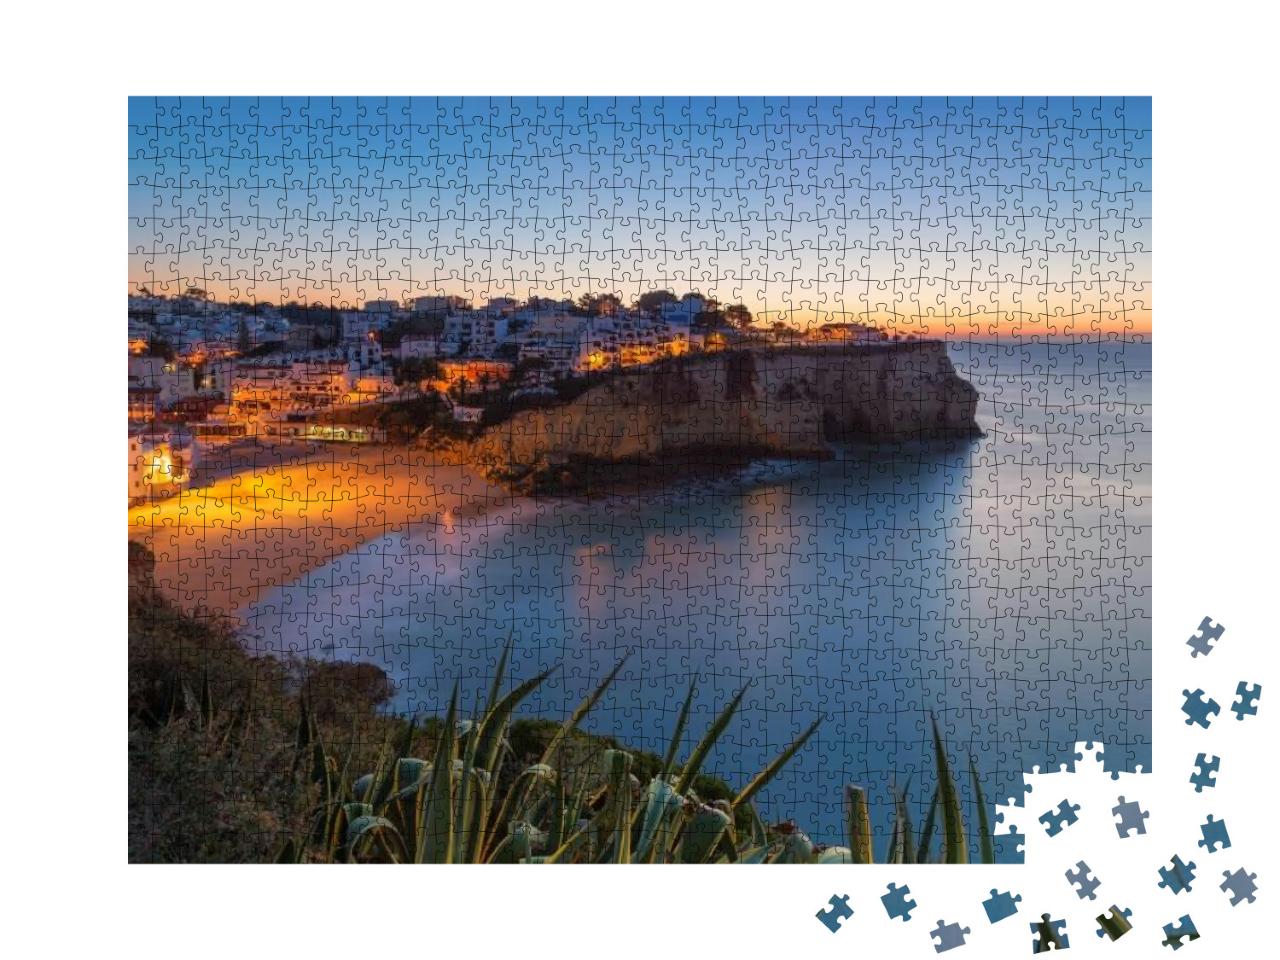 Puzzle 1000 Teile „Sonnenaufgang nahe dem Dorf Carvoeiro, Portugal“